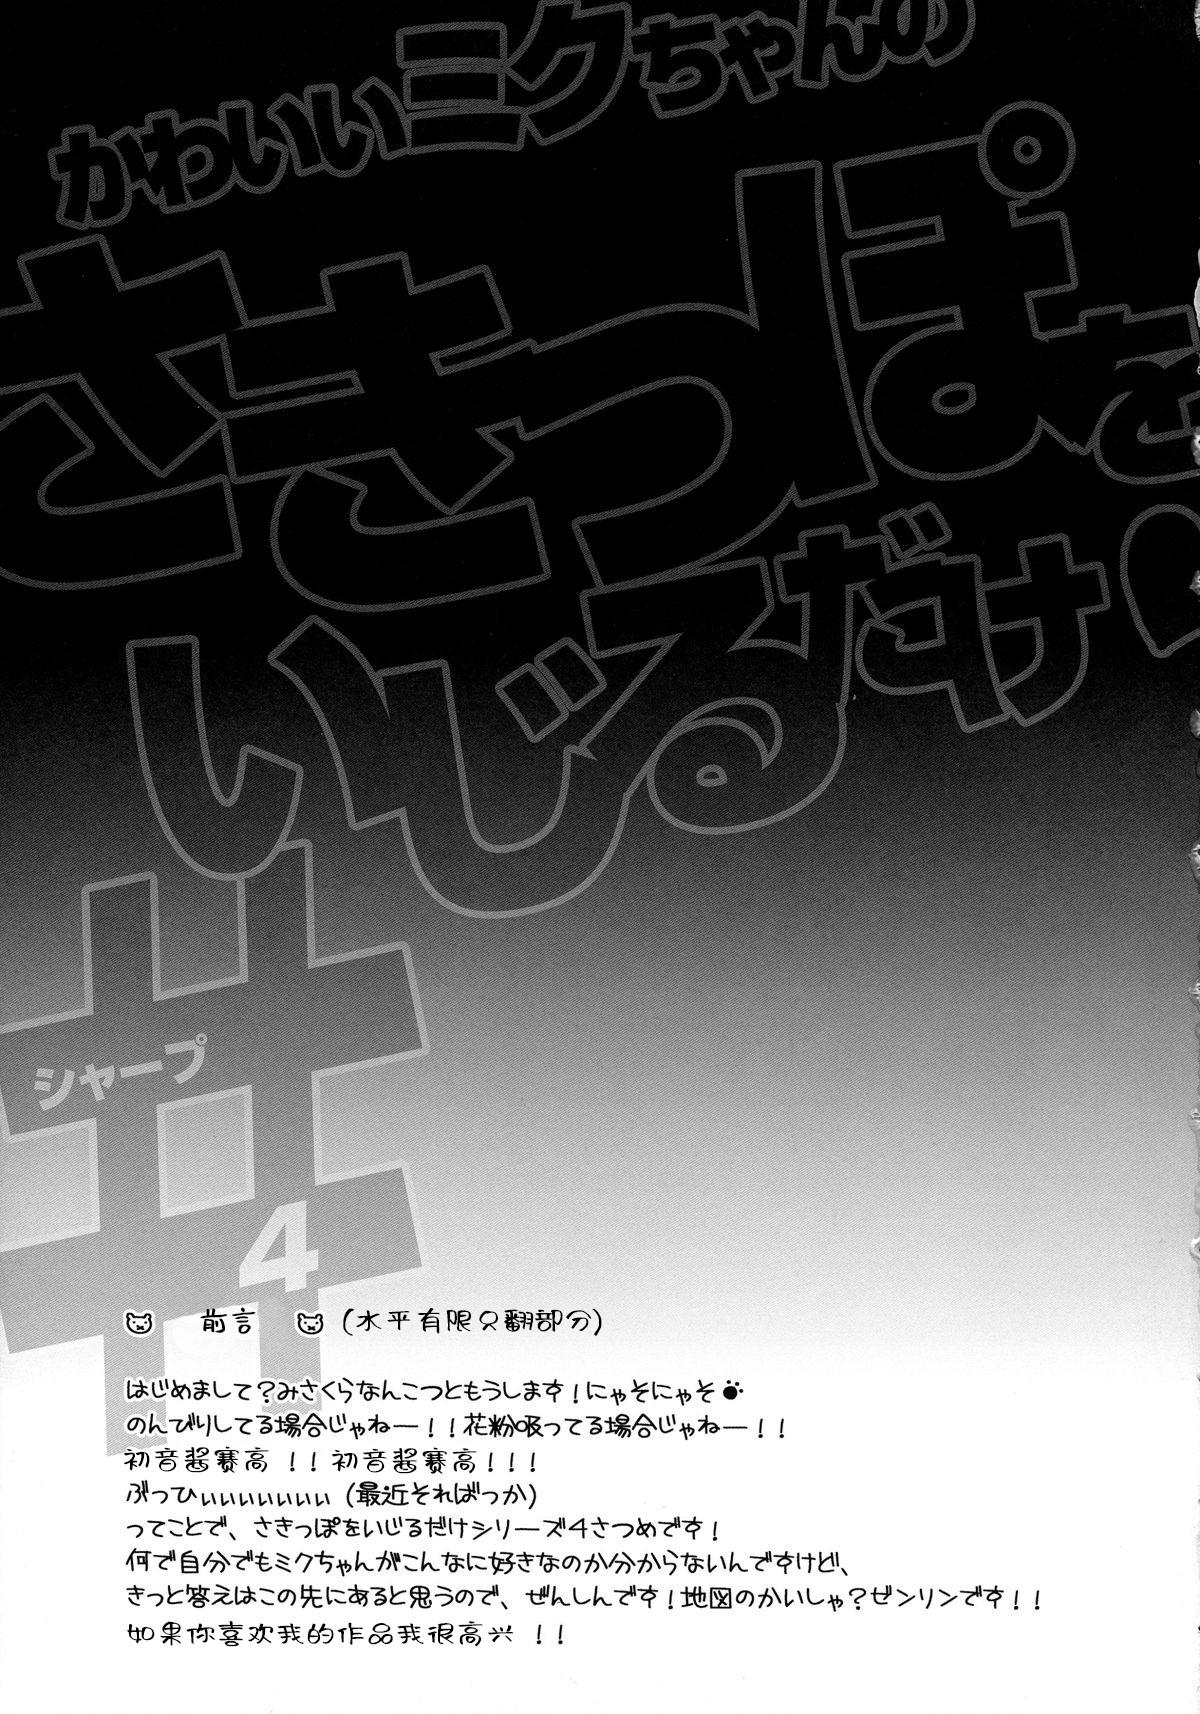 Jizz Kawaii Miku-chan no Sakippo o Ijiru dake# | 只要調教一下可愛Miku的尖端就可以了!# - Vocaloid Verga - Page 3